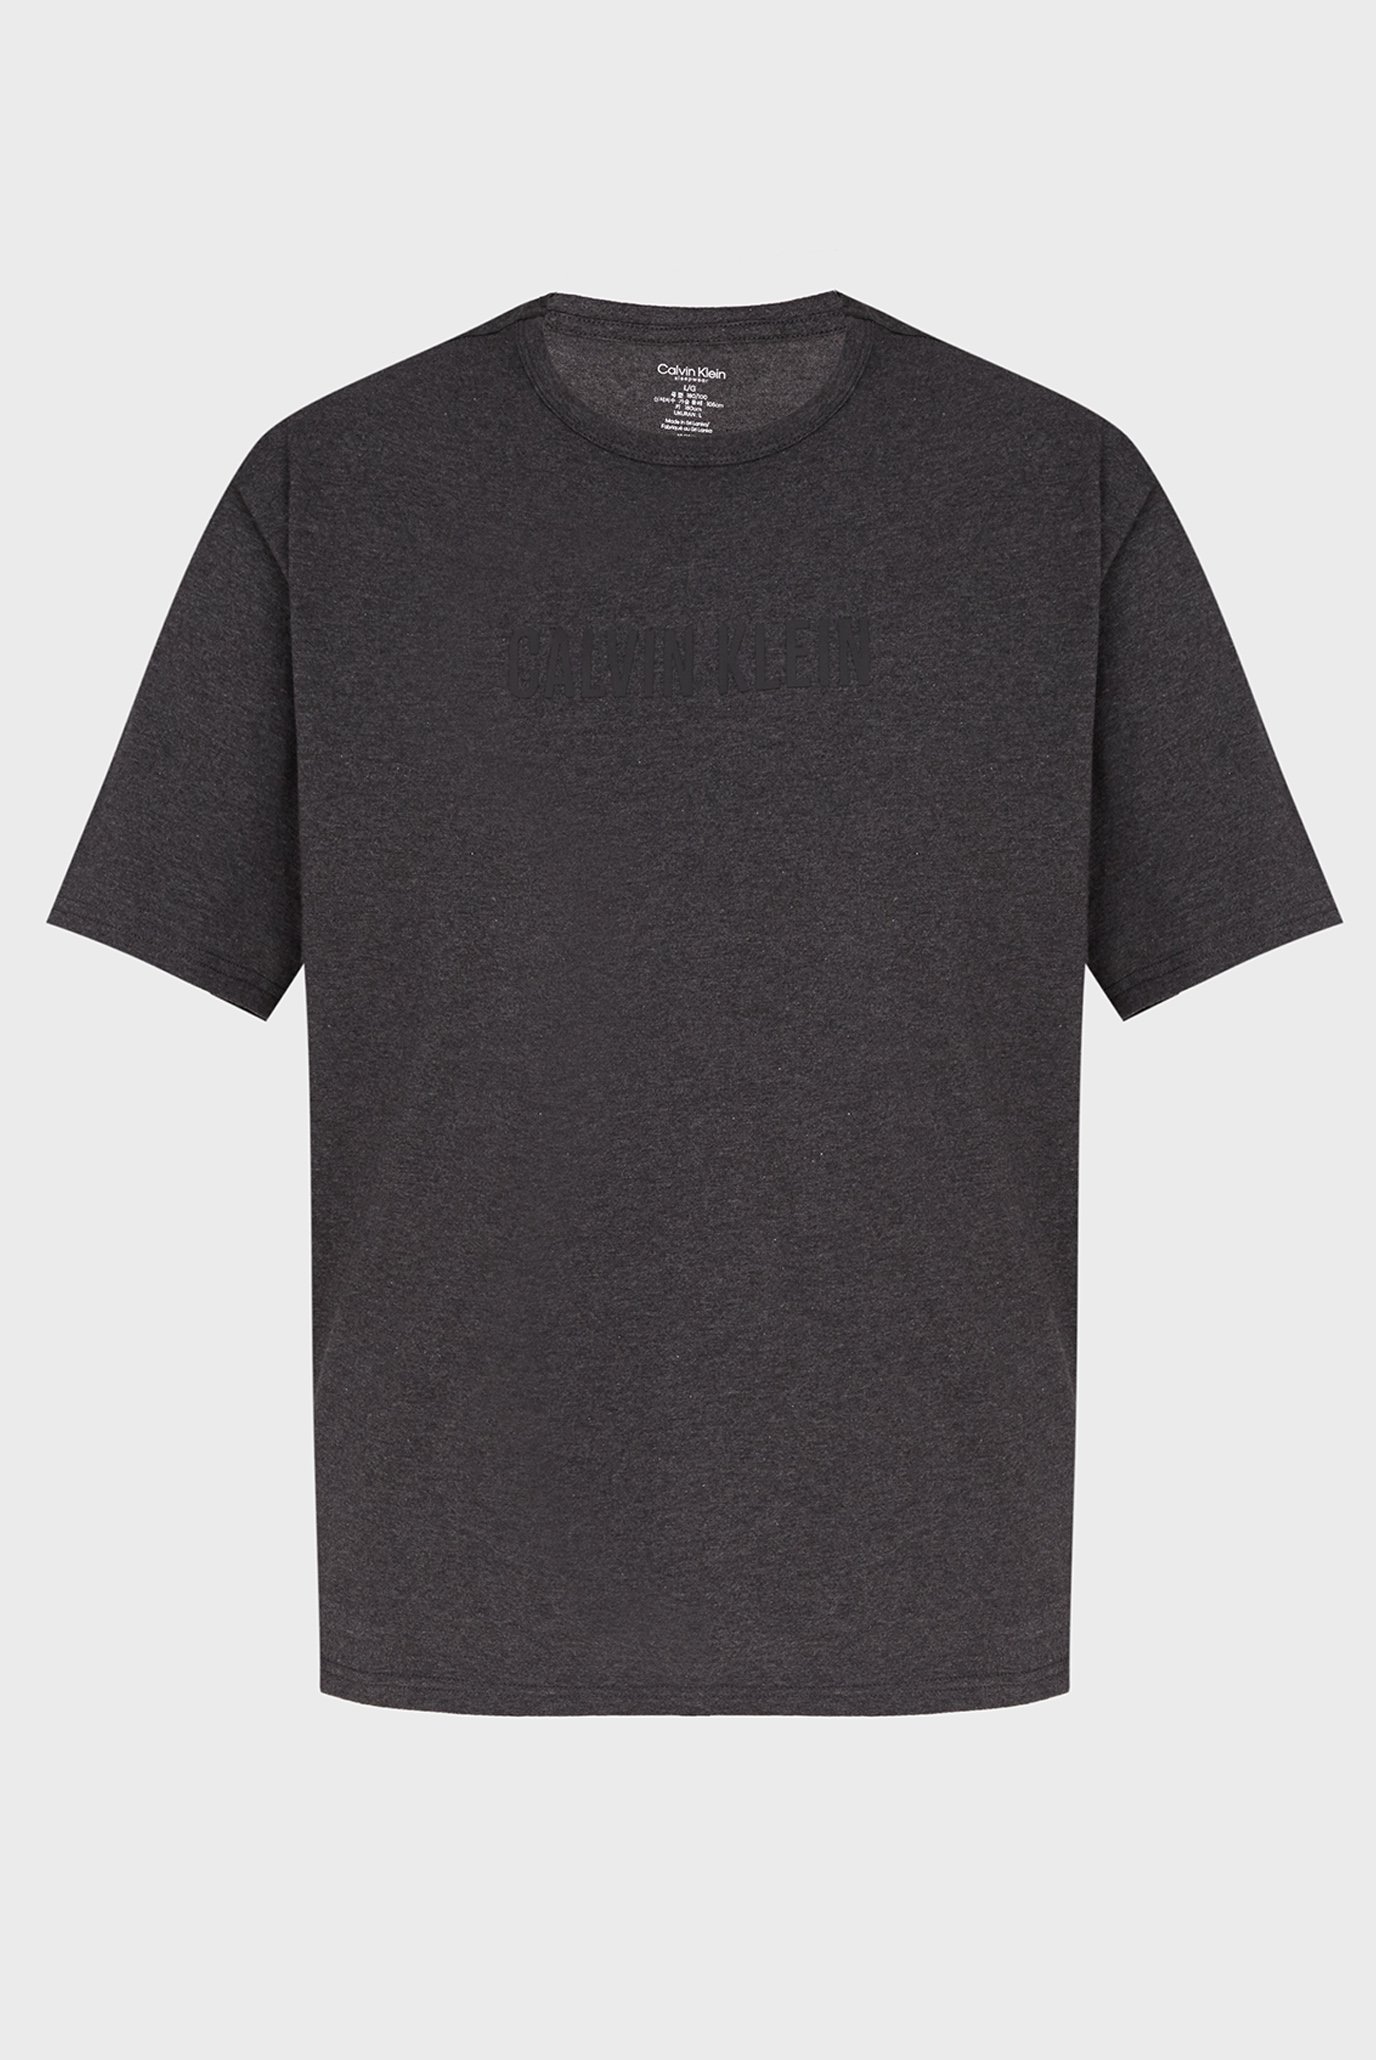 Мужская темно-серая футболка S/S CREW NECK 1